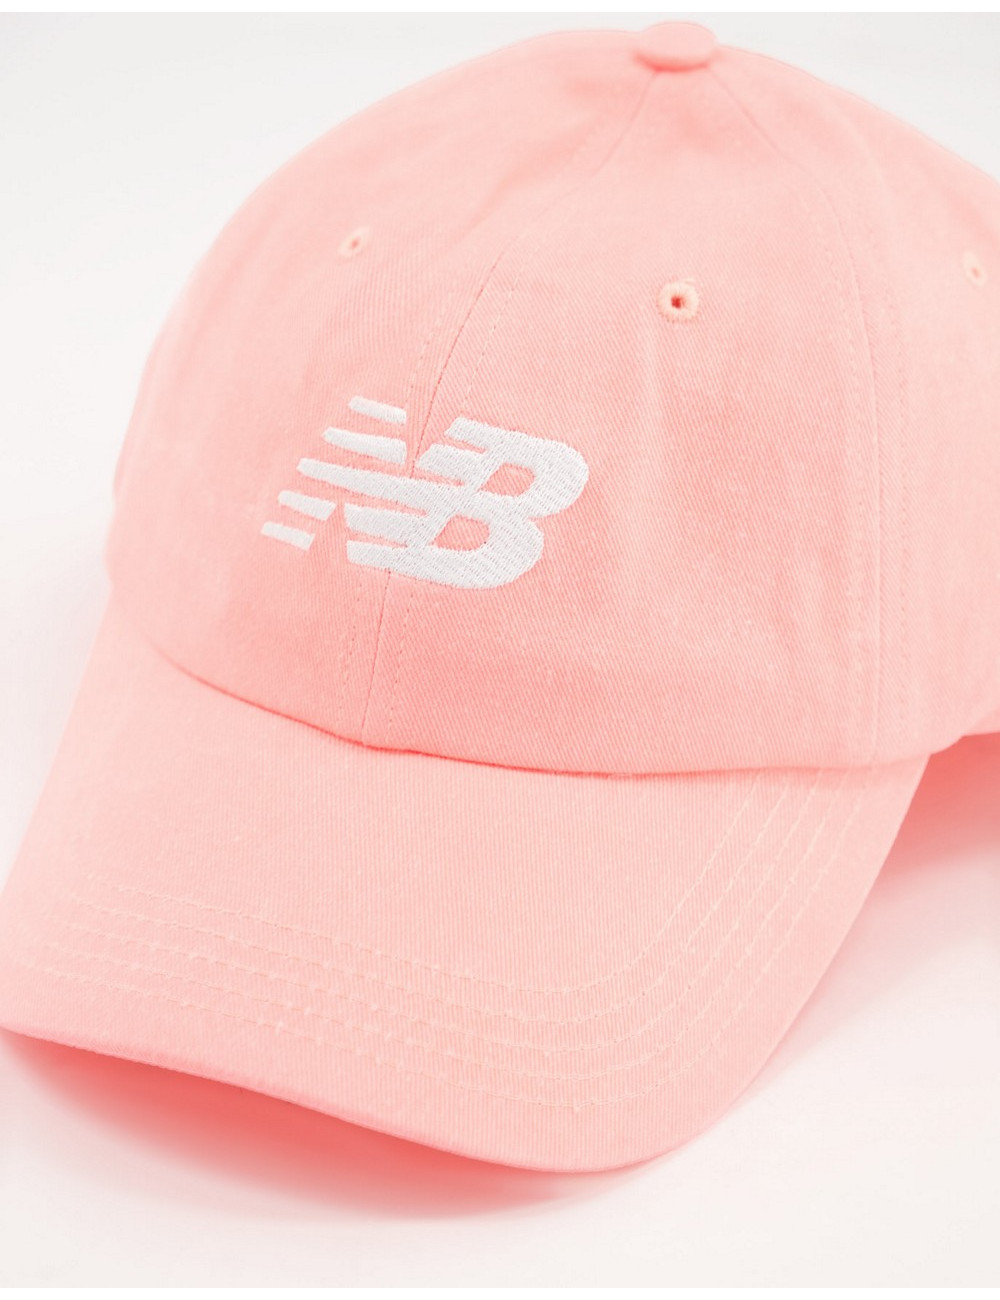 New Balance logo cap in pink